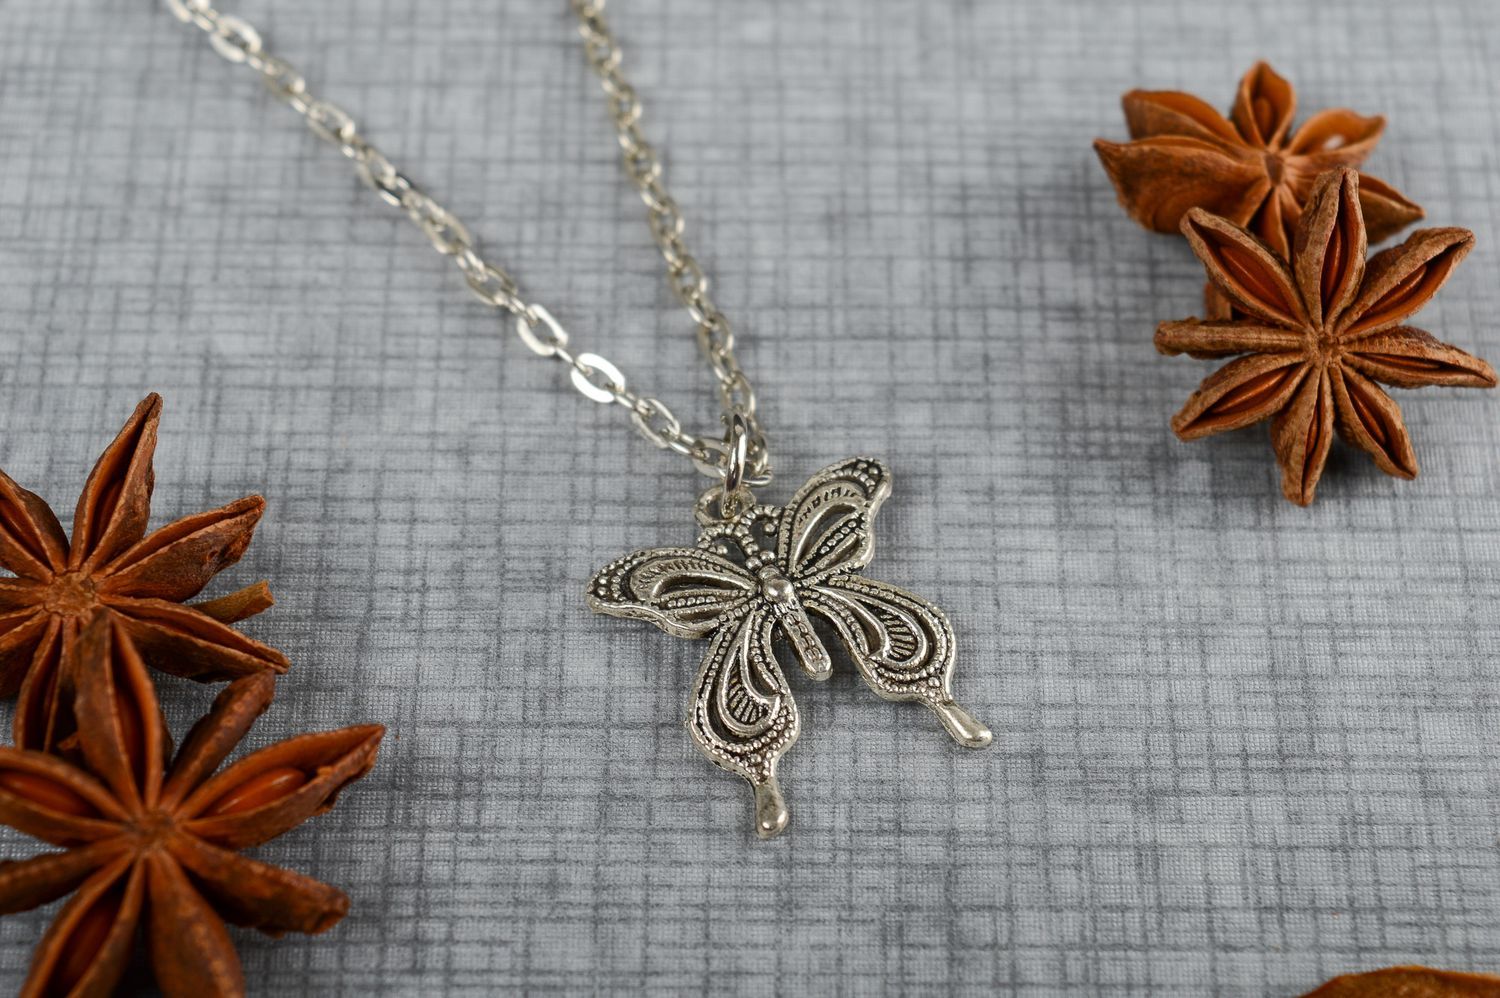 Handmade trendy pendant metal jewelry metal pendant stylish jewelry for women photo 1